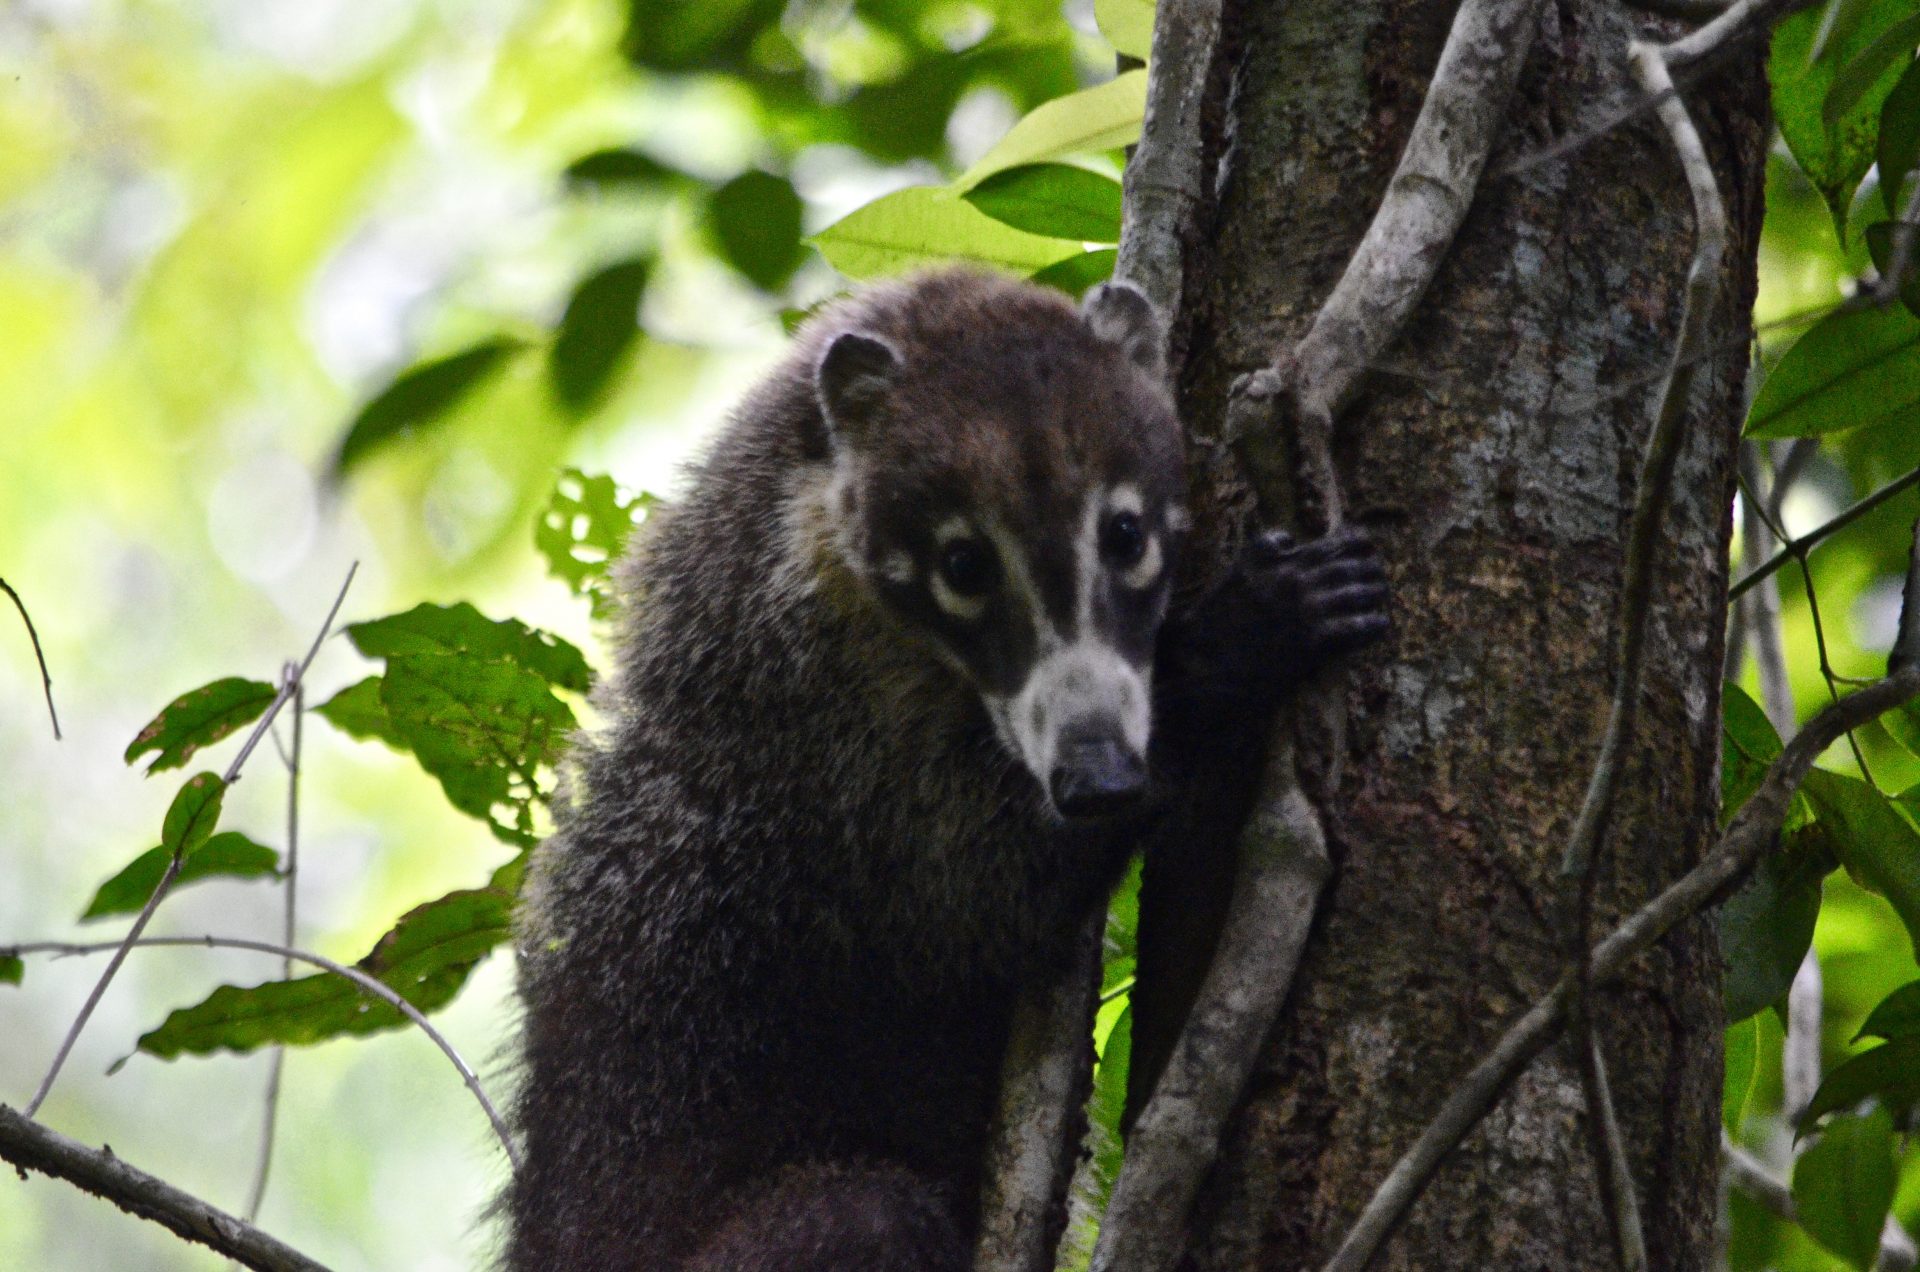 A coati, relative of raccoons, on Barro Colorado Island, Panama.